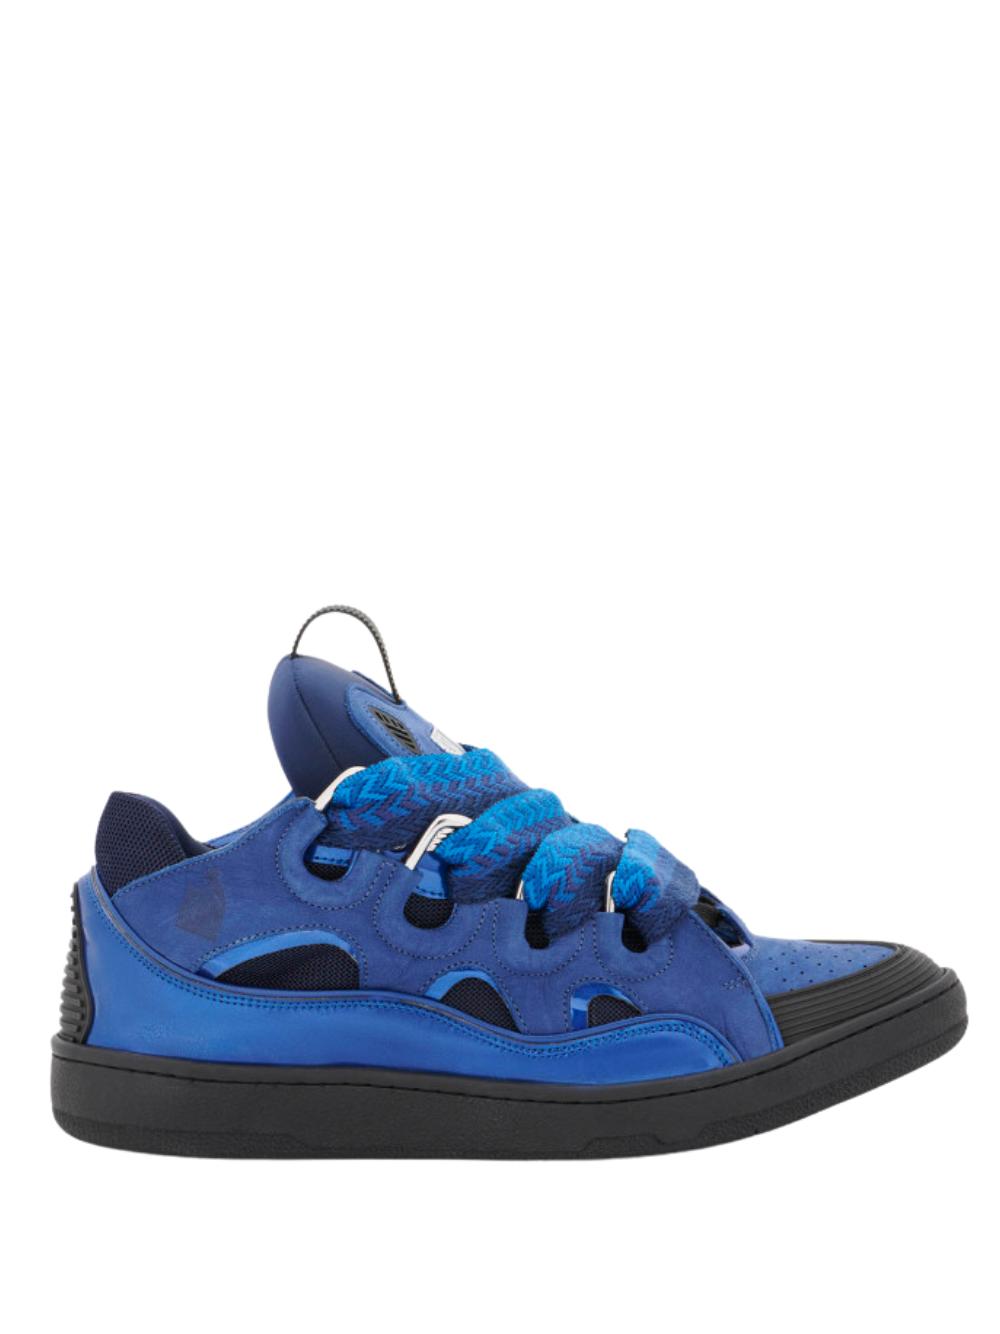 Lanvin Metallic Leather Curb Sneakers Majorelle Blue for Men | Lyst